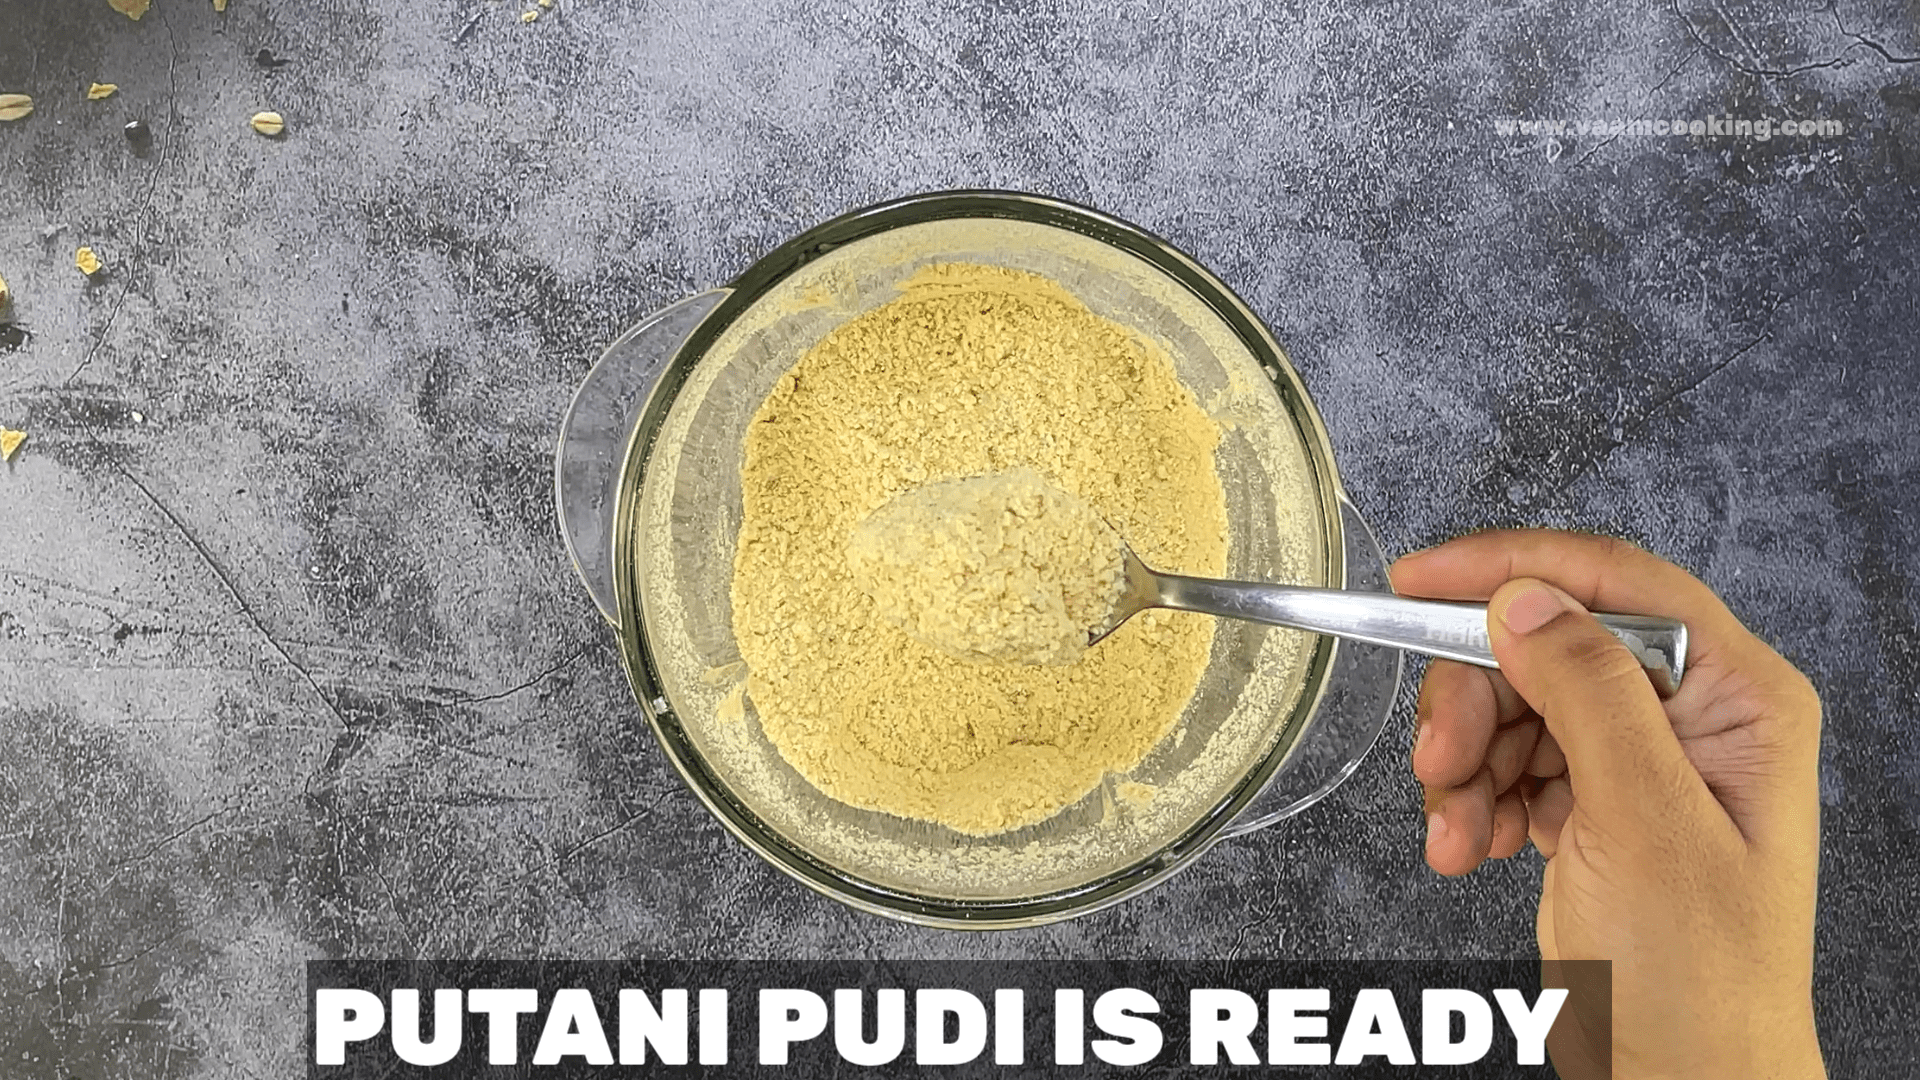 Putani-Chutney-podi is ready